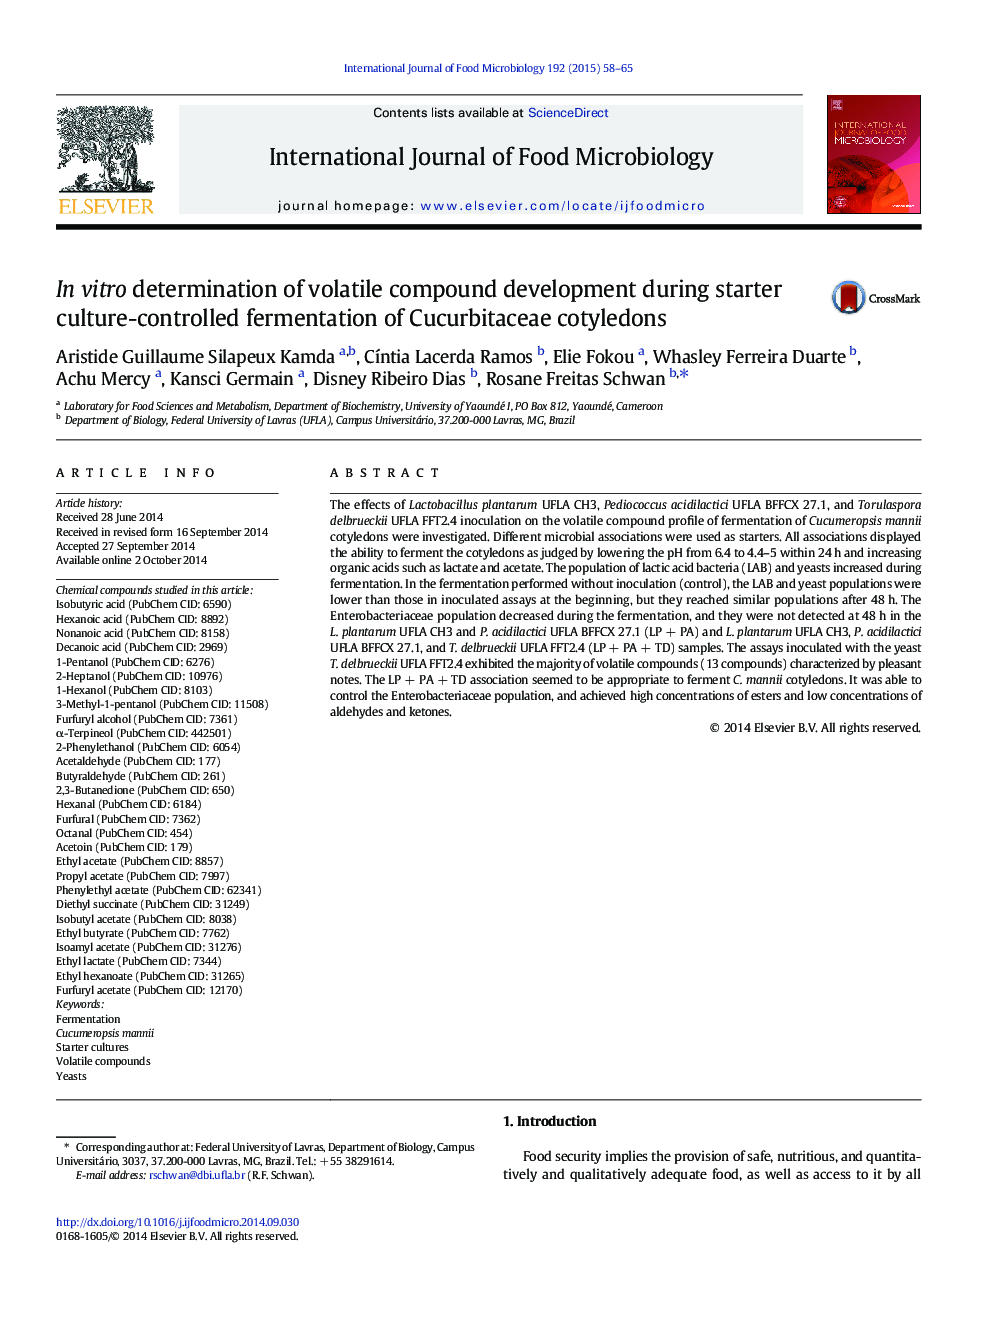 In vitro determination of volatile compound development during starter culture-controlled fermentation of Cucurbitaceae cotyledons